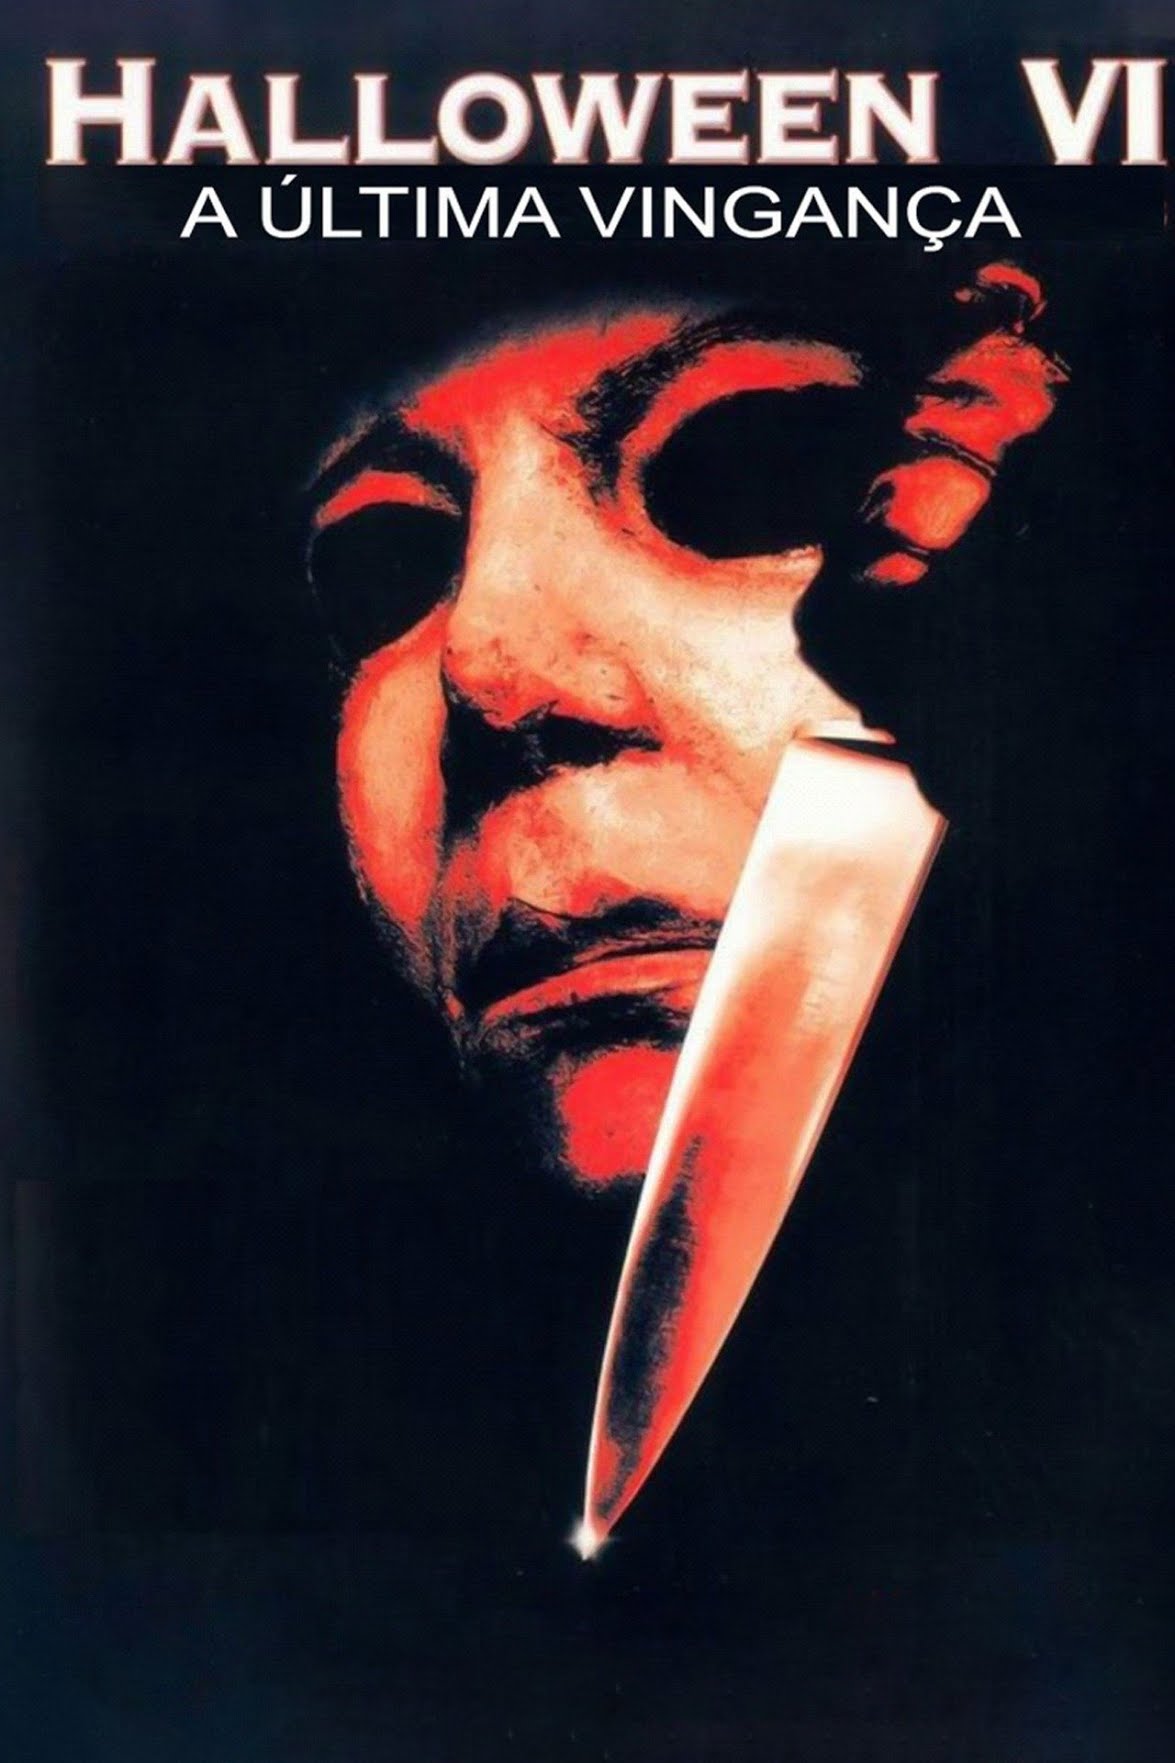 Halloween: 6 filmes de terror em alta para assistir no HBO Max